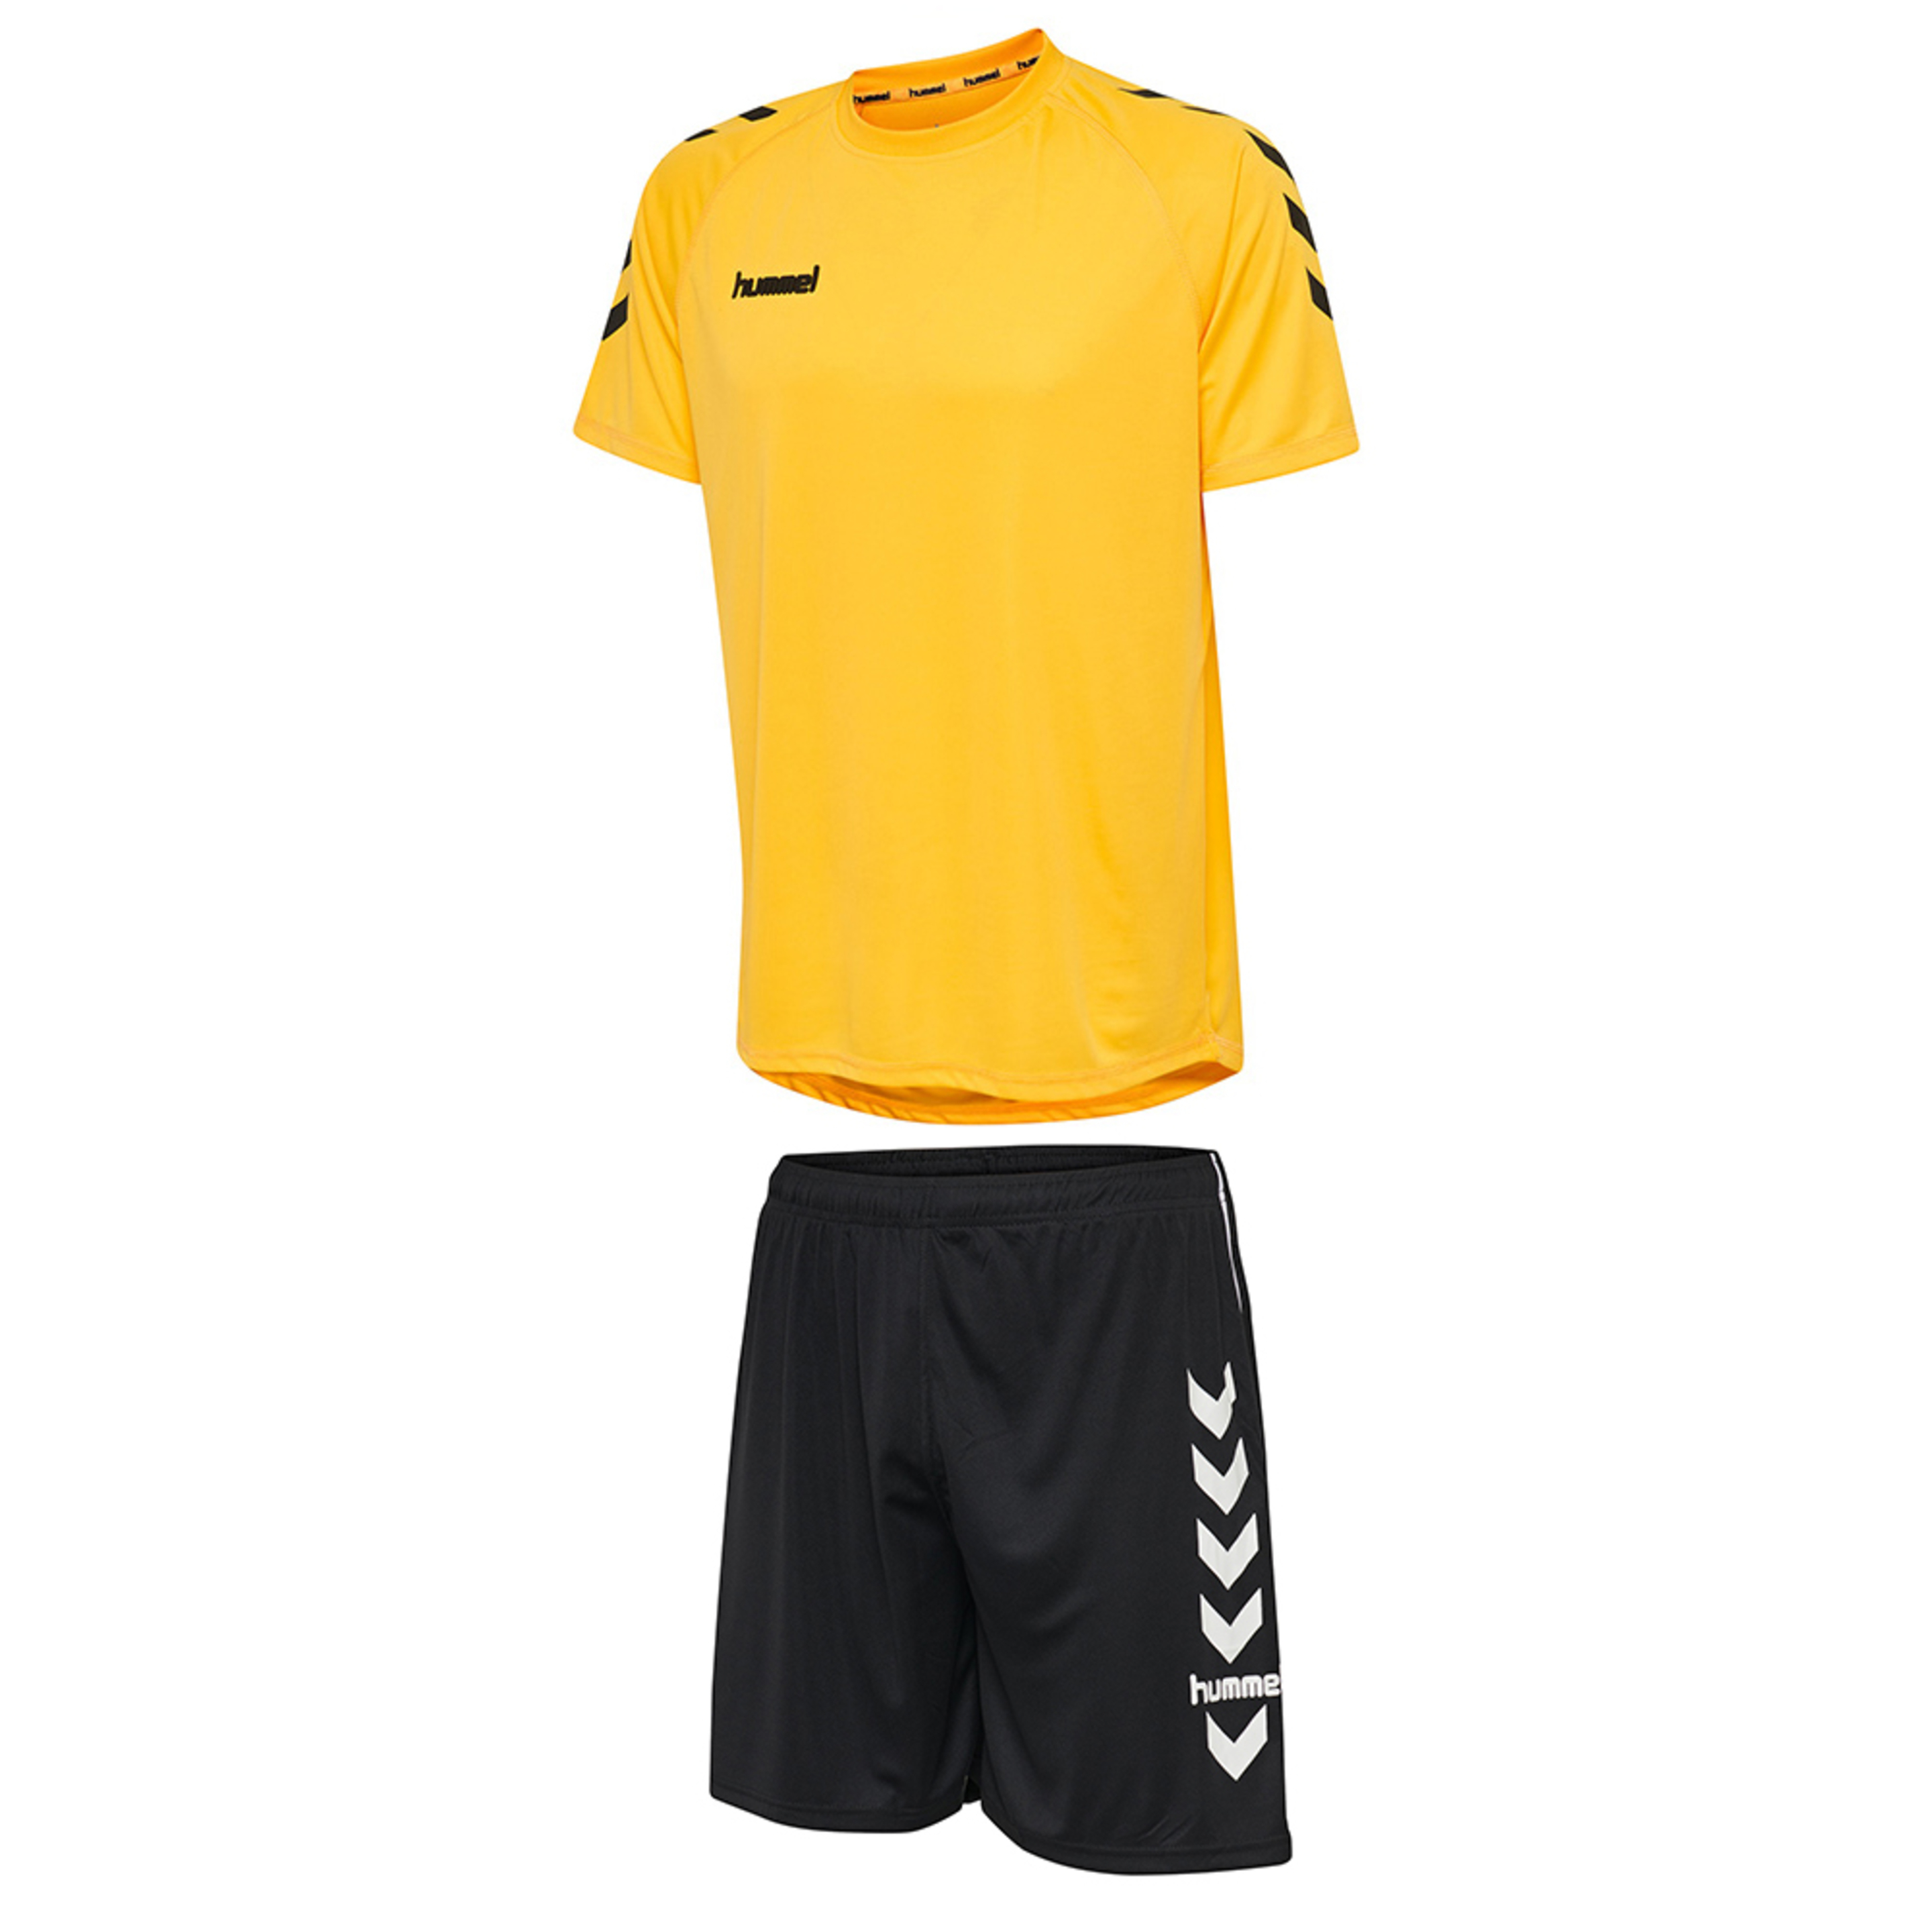 Equipamento Hummel Futebol - amarillo-negro - 